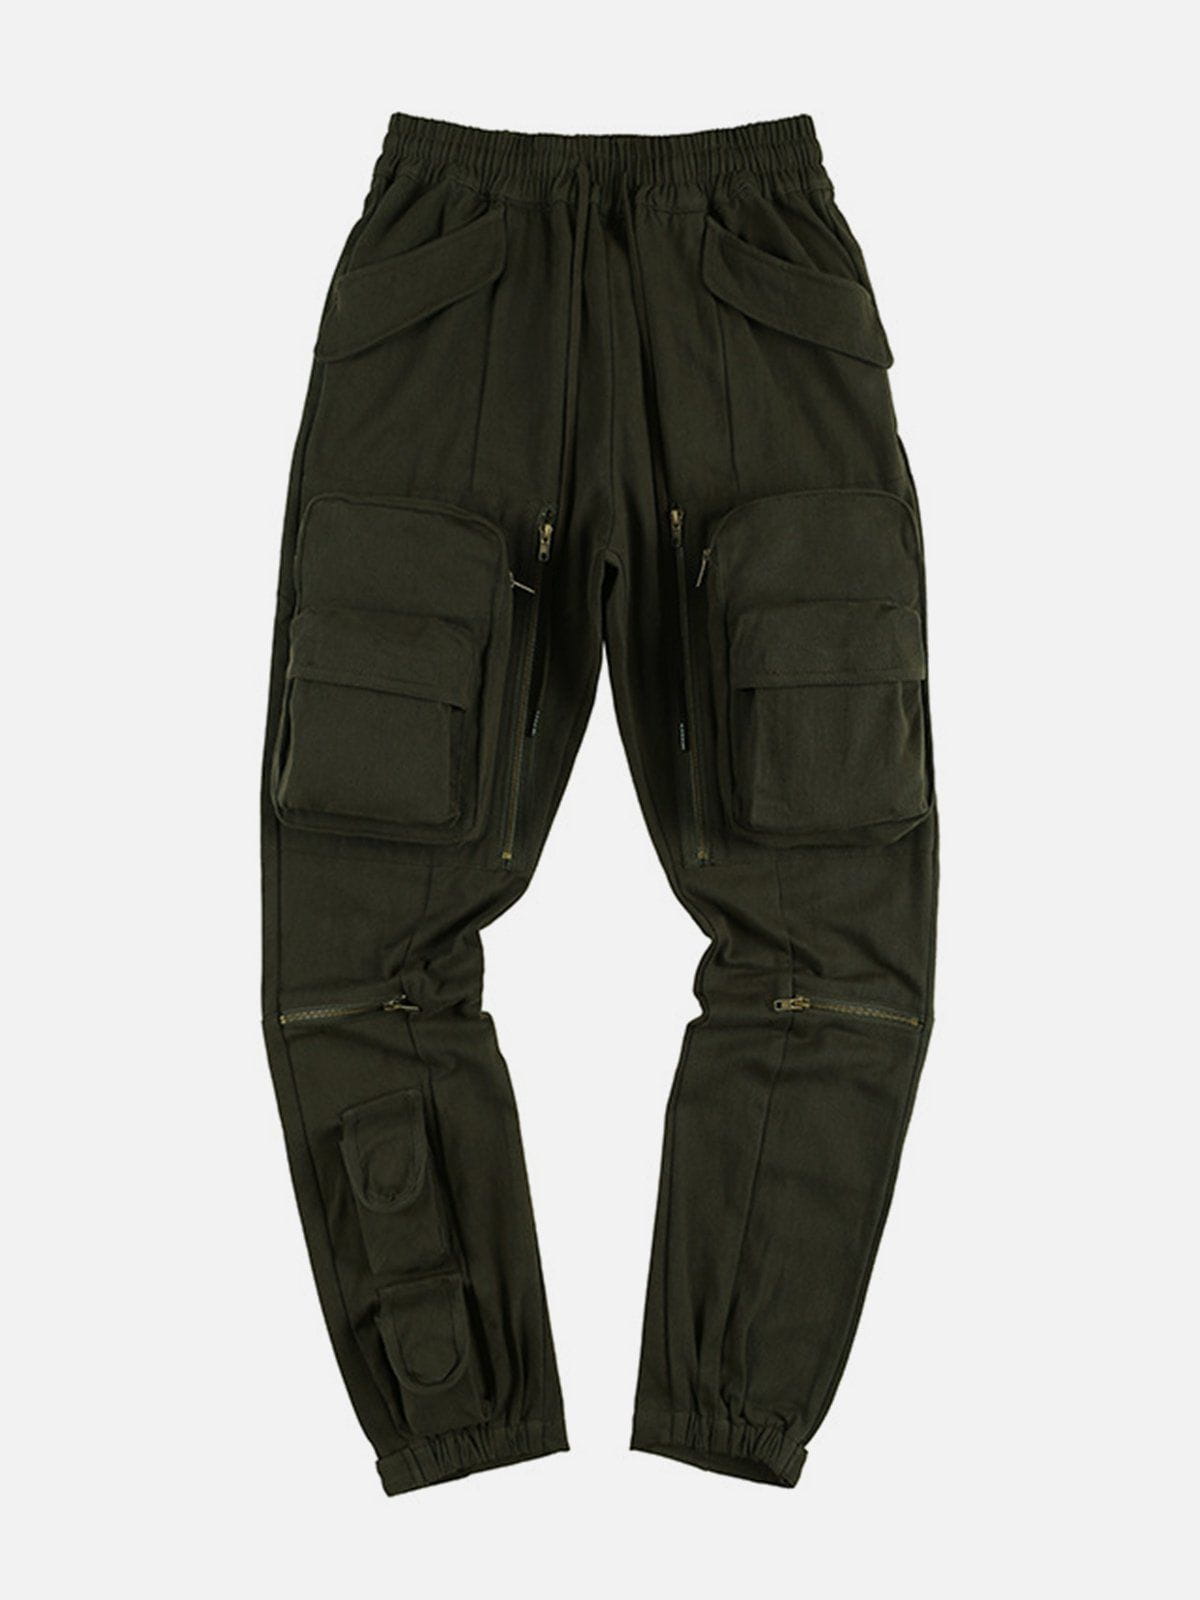 Sneakerland® - Multi Pocket Technical Cargo Pants